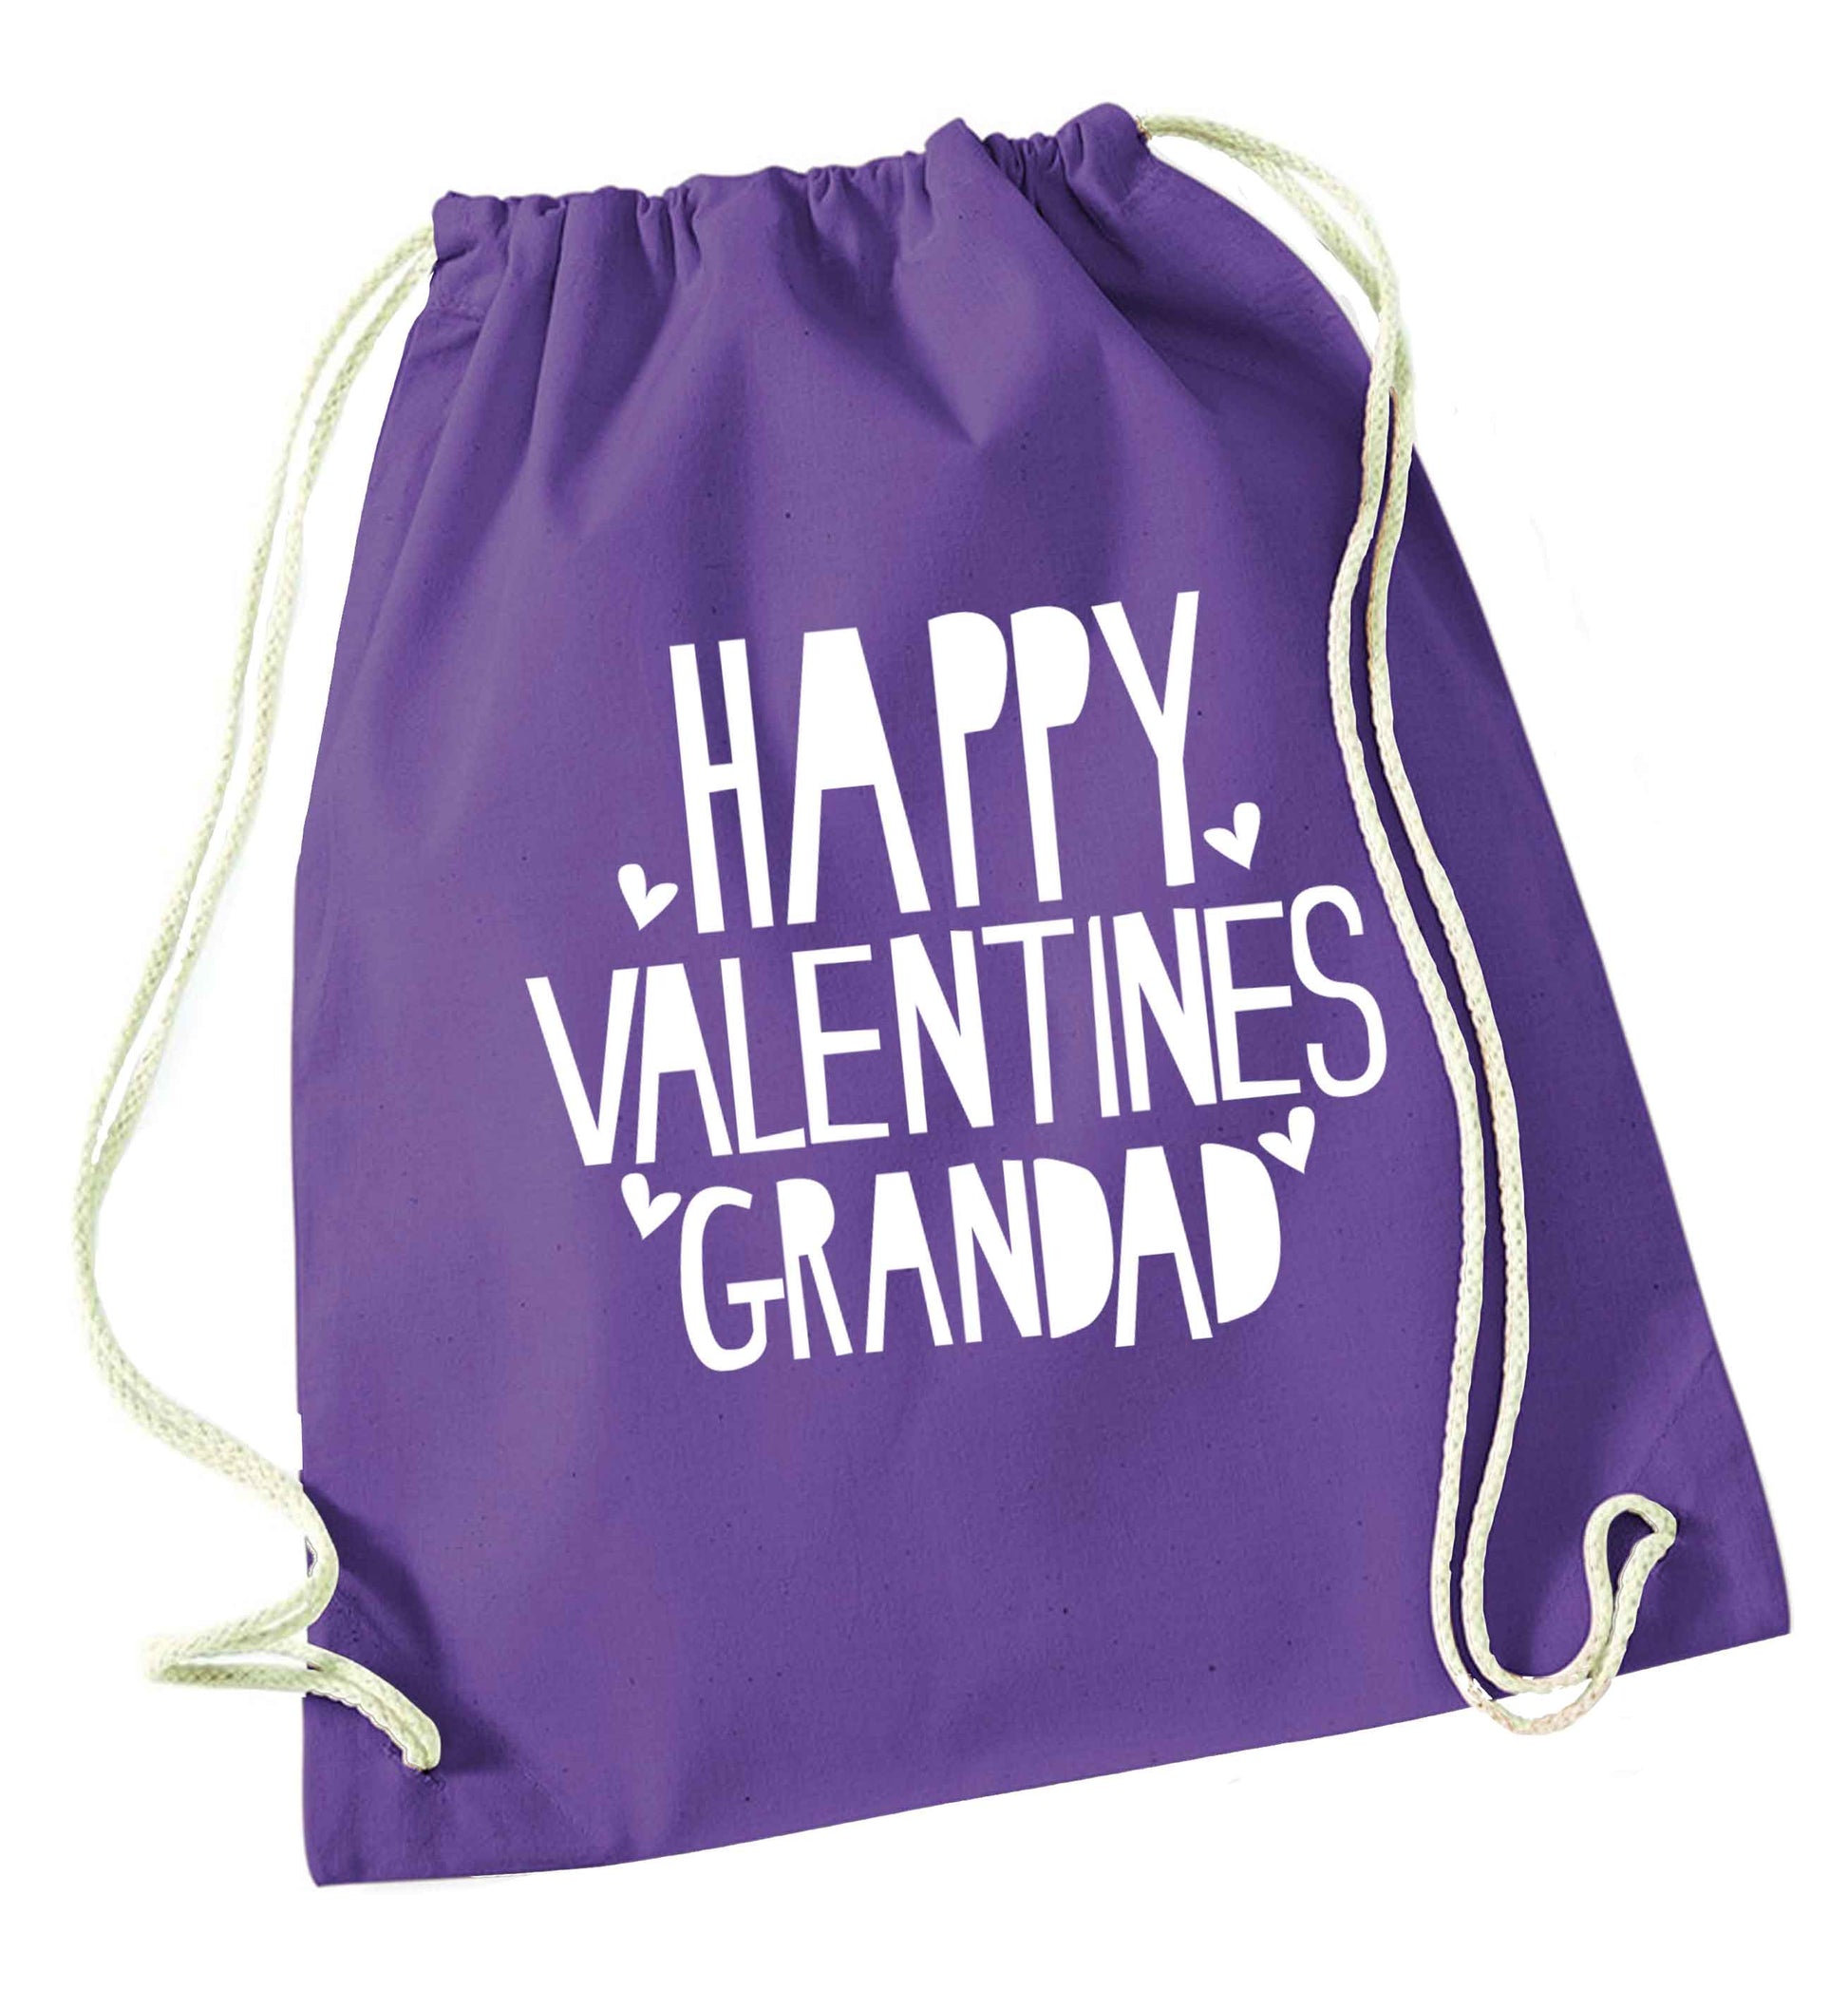 Happy valentines grandad purple drawstring bag